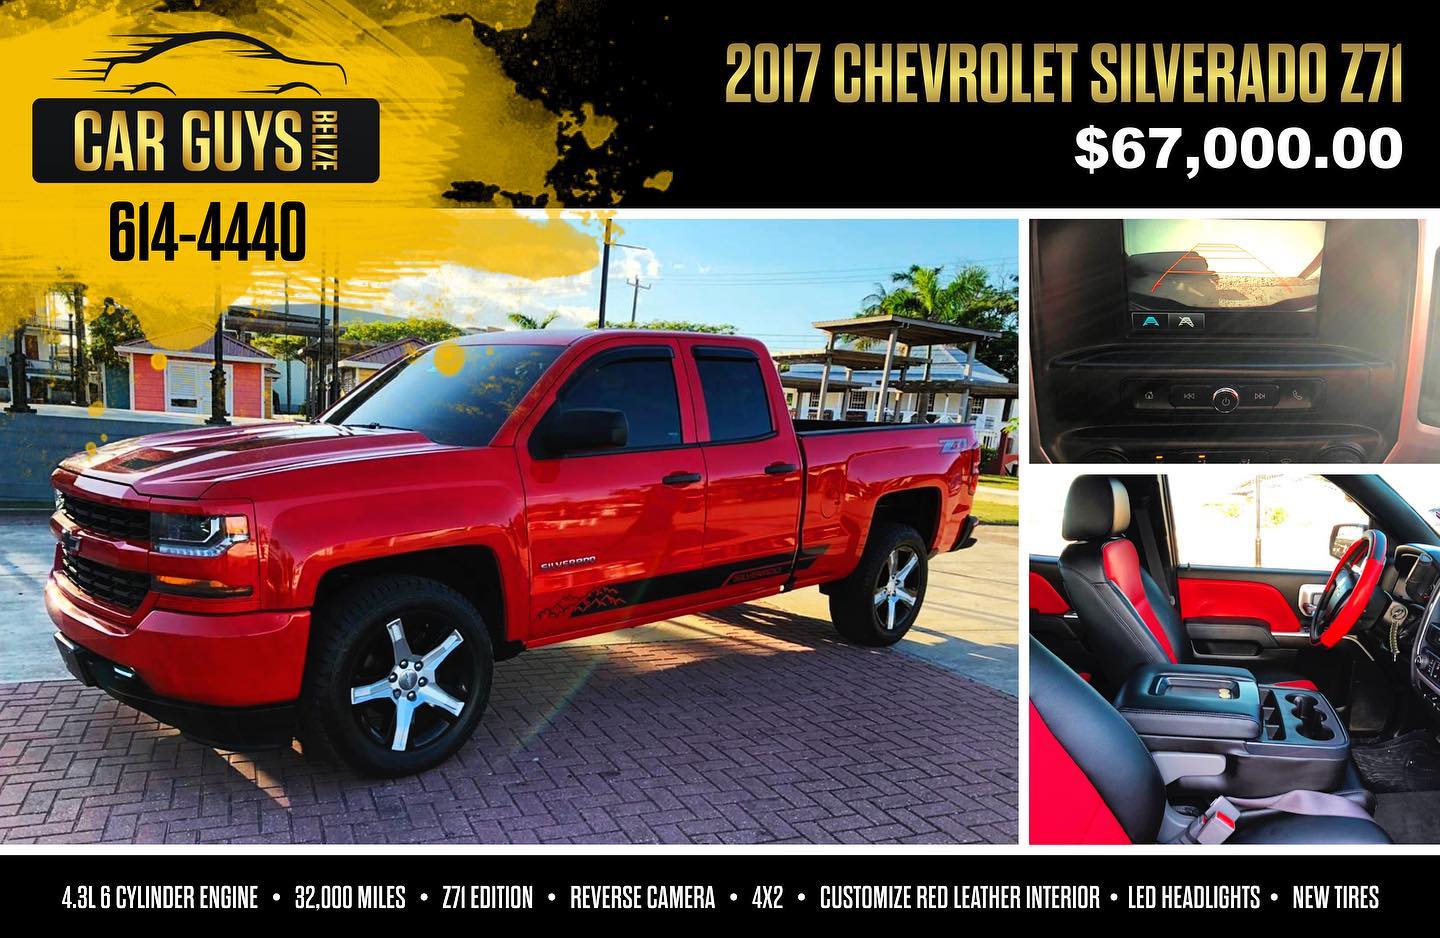 Truck For Sale 2017 Chevrolet Silverado Z71 Cars Trucks